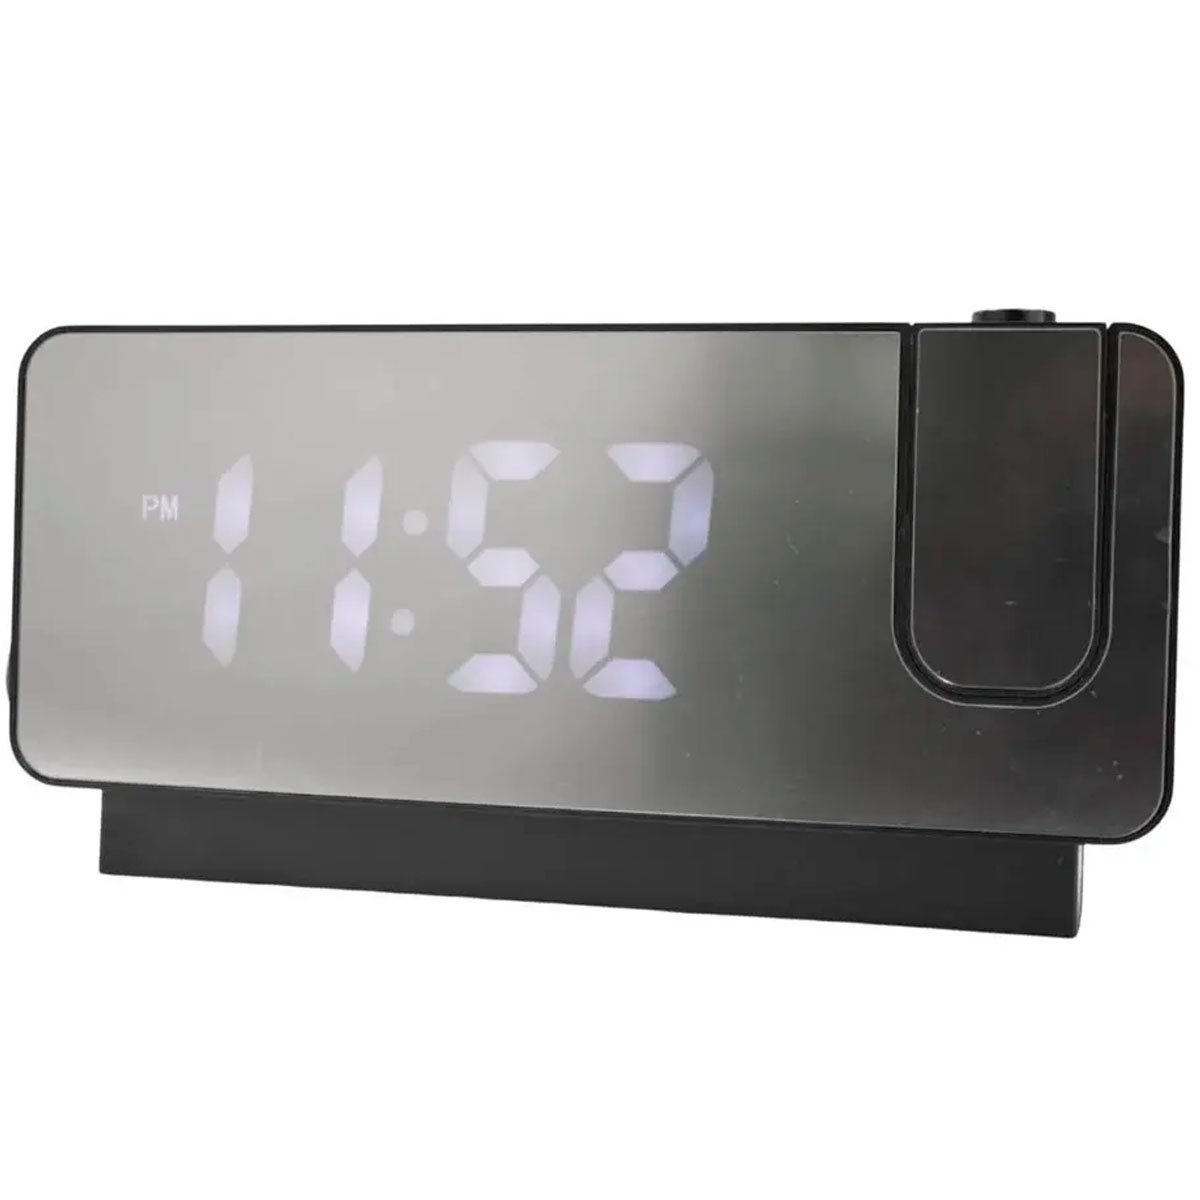 06 relogio multifuncional projetor de horas despertador alarme